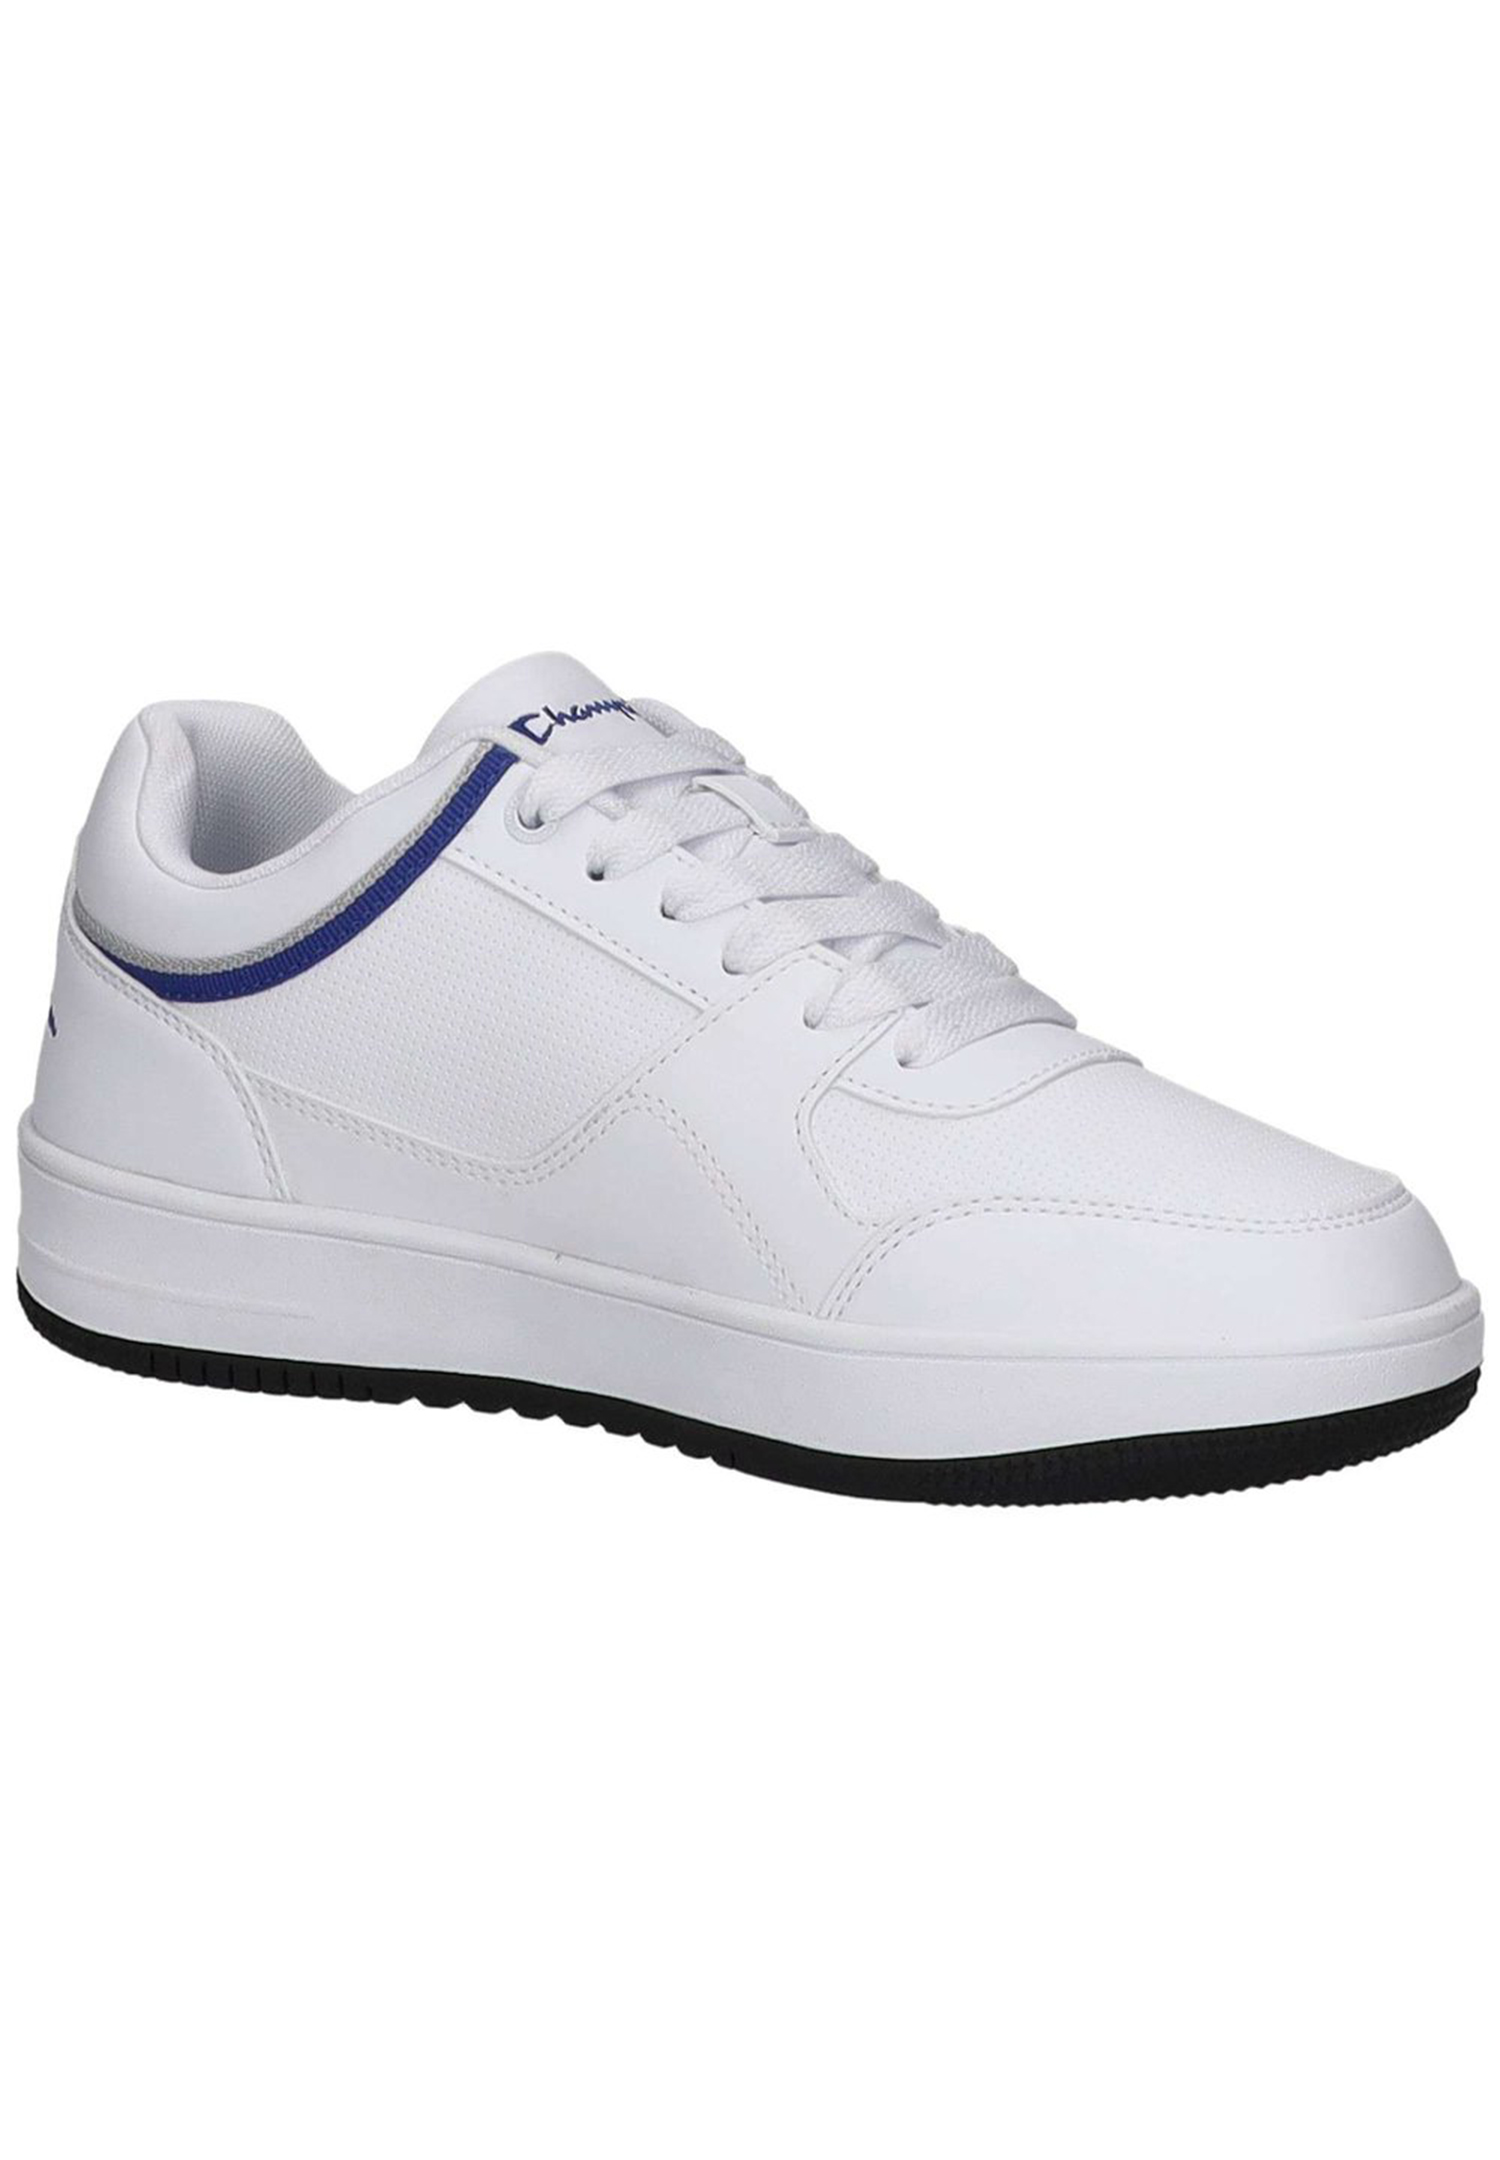 Champion REBOUND LOW Herren Sneaker S21905-CHA-WW004 weiß/grau/blau  